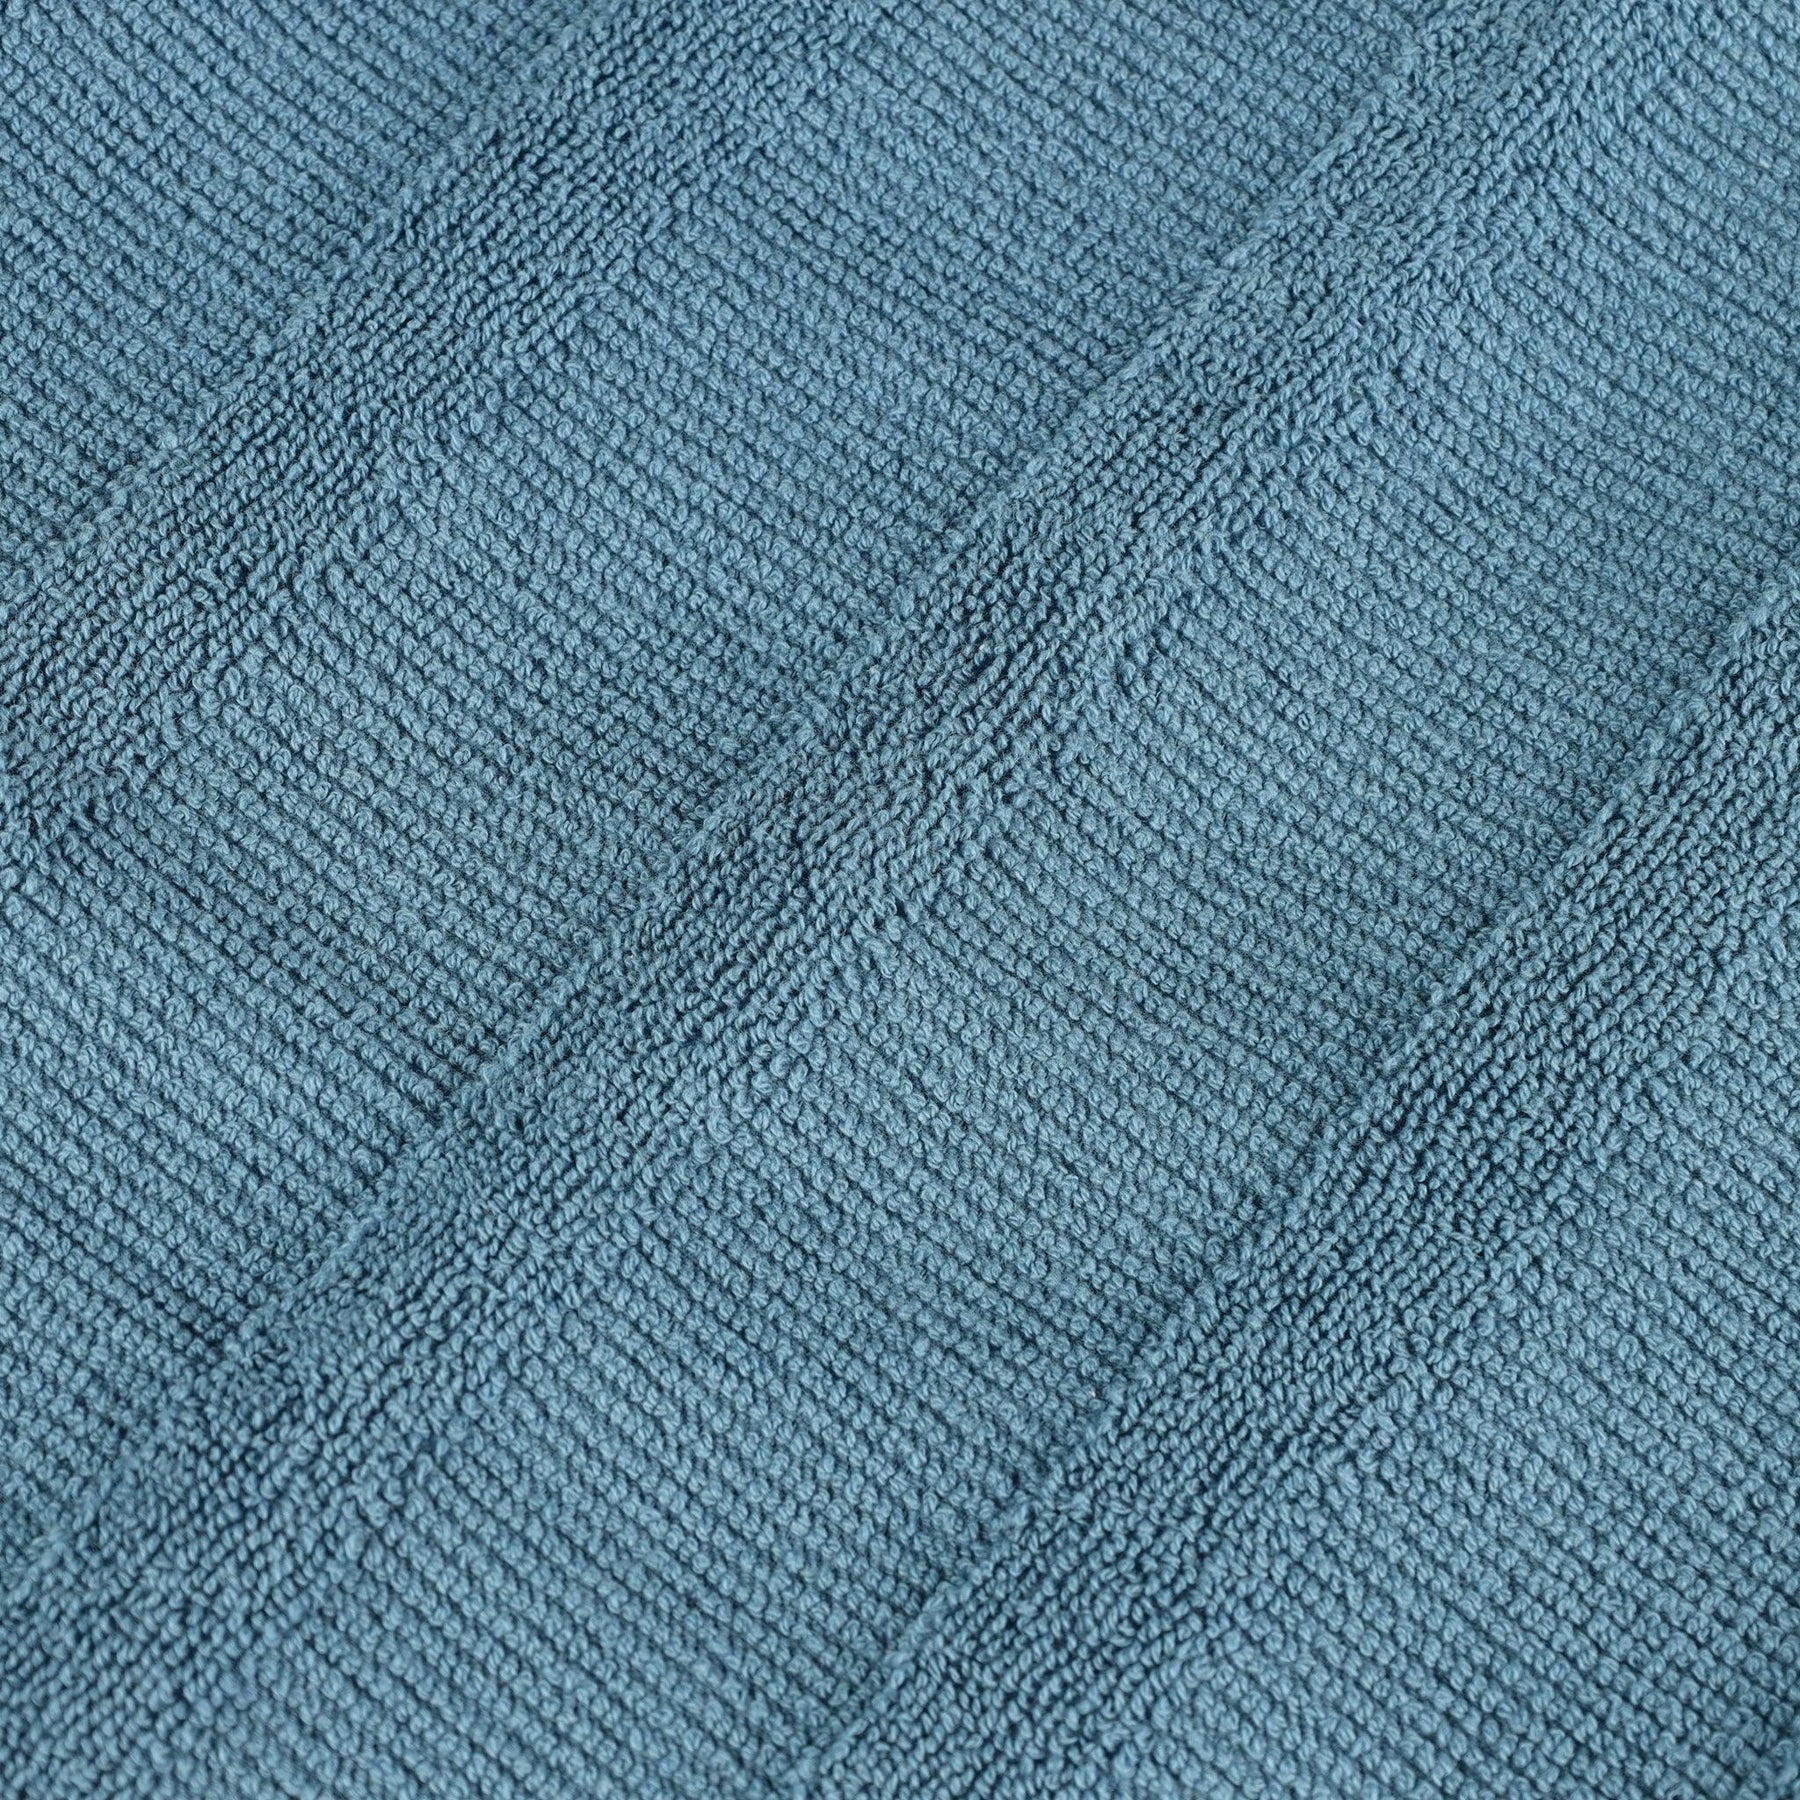 Ribbed Cotton Medium Weight 6 Piece Bath Towel Set - Denim Blue